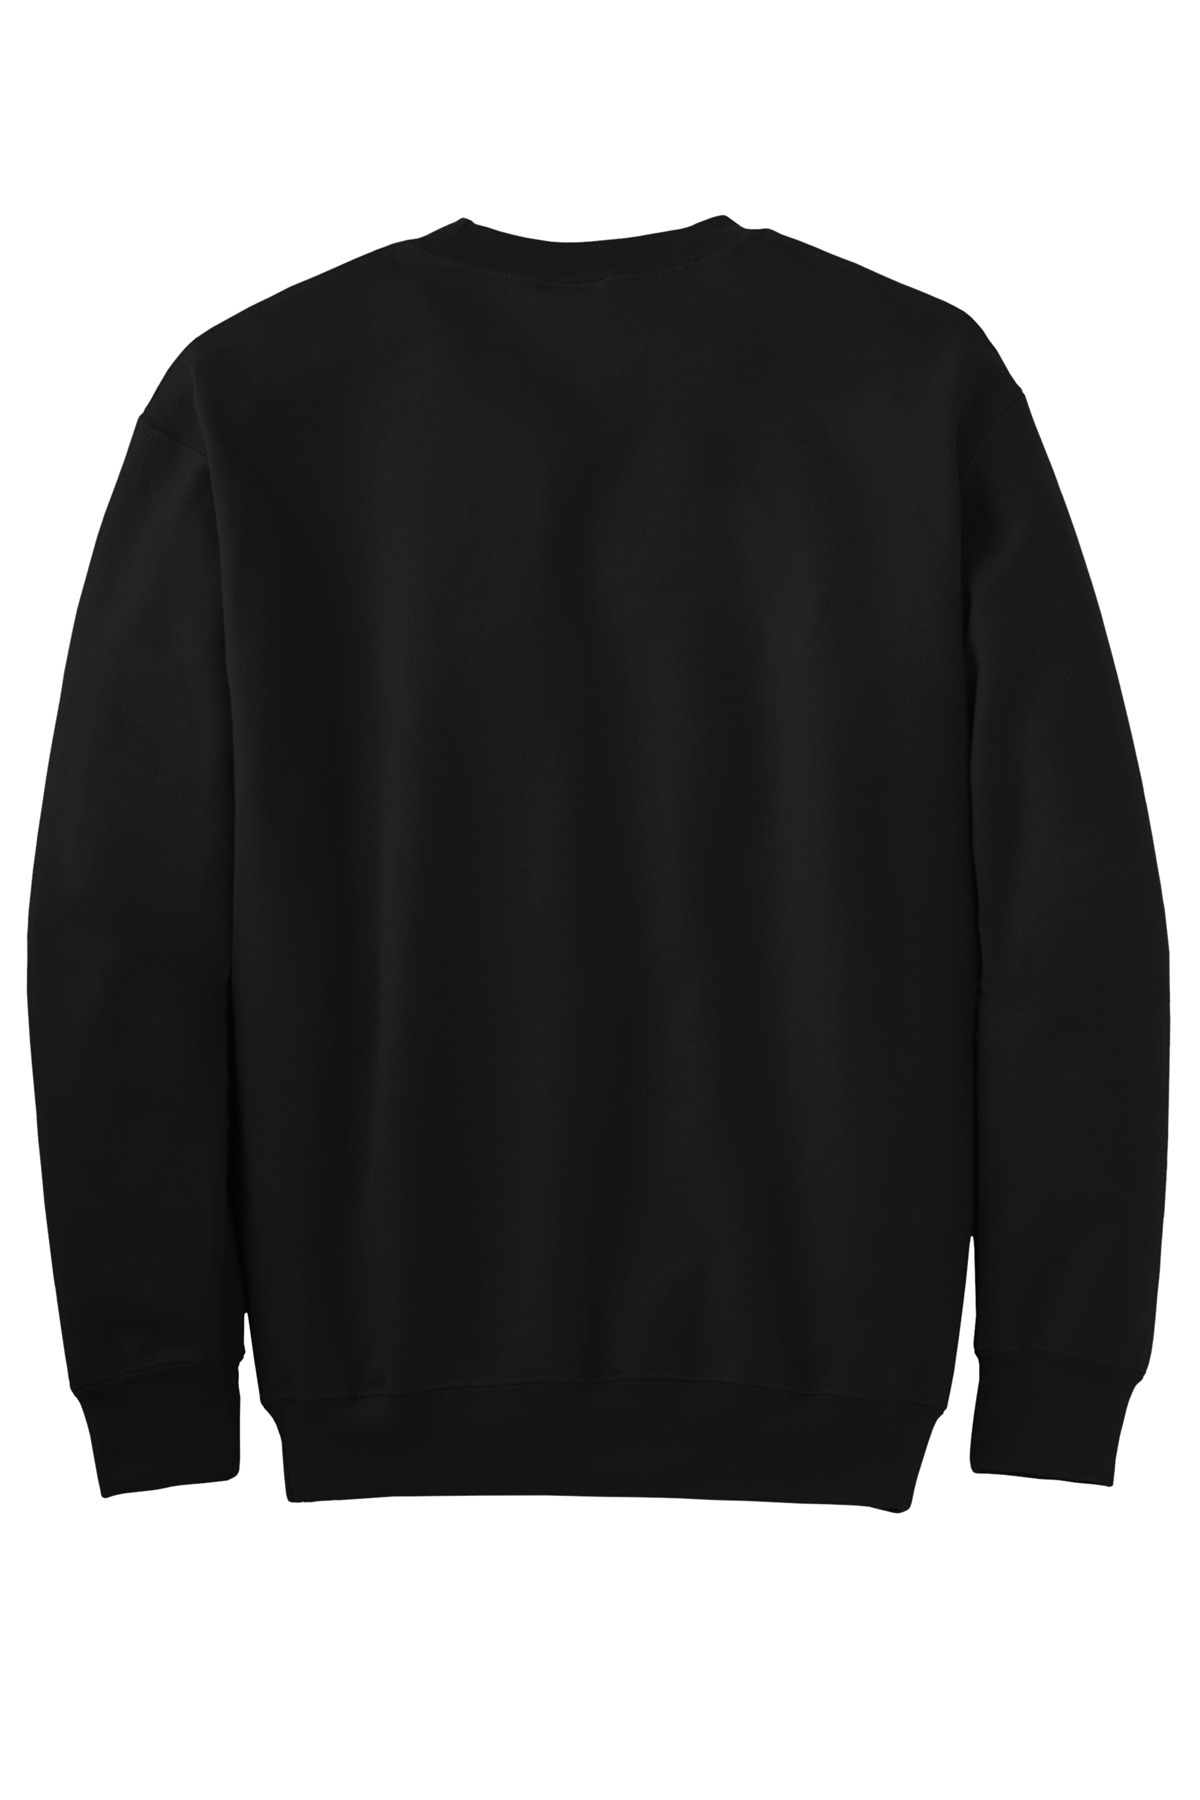 Gildan - DryBlend Crewneck Sweatshirt | Product | SanMar